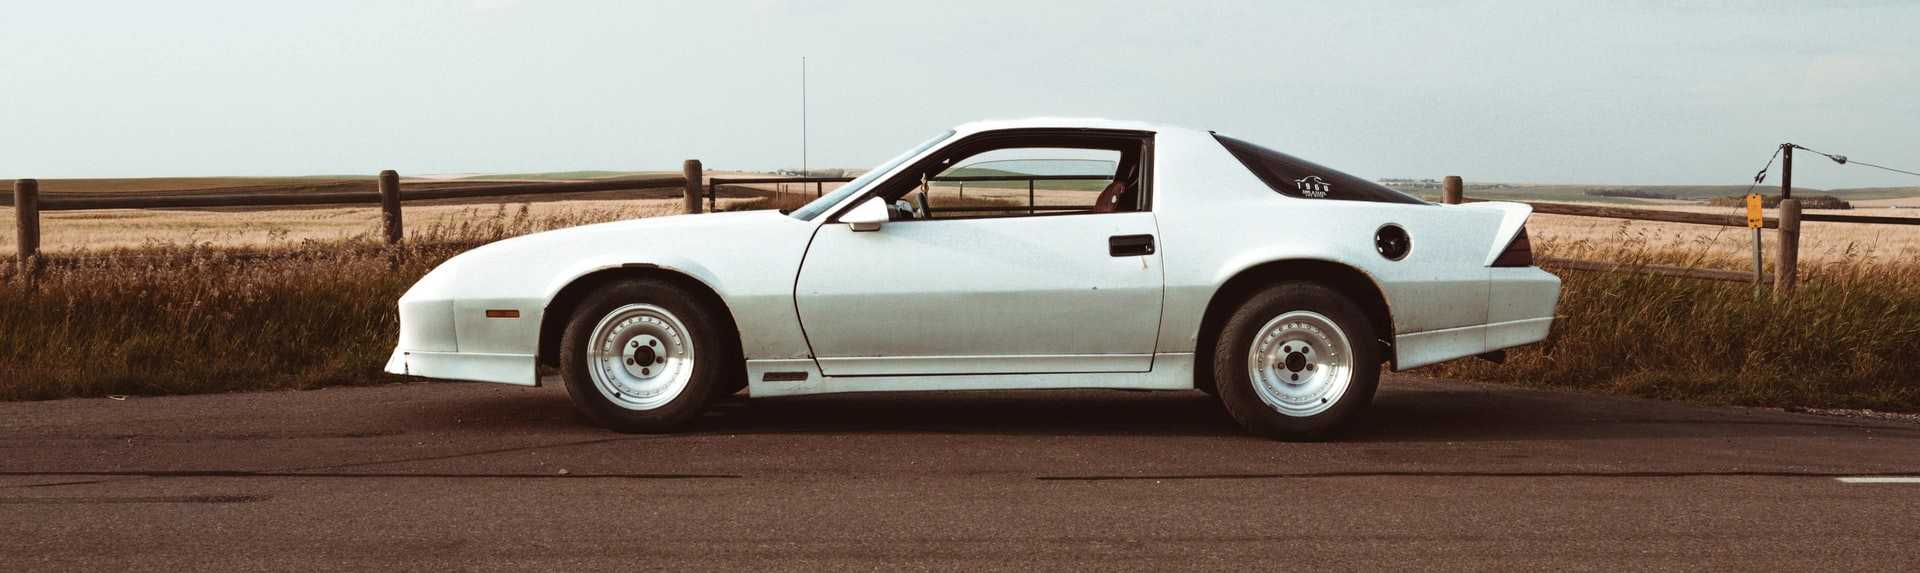 Classic 1988 White Camaro | Breast Cancer Car Donations